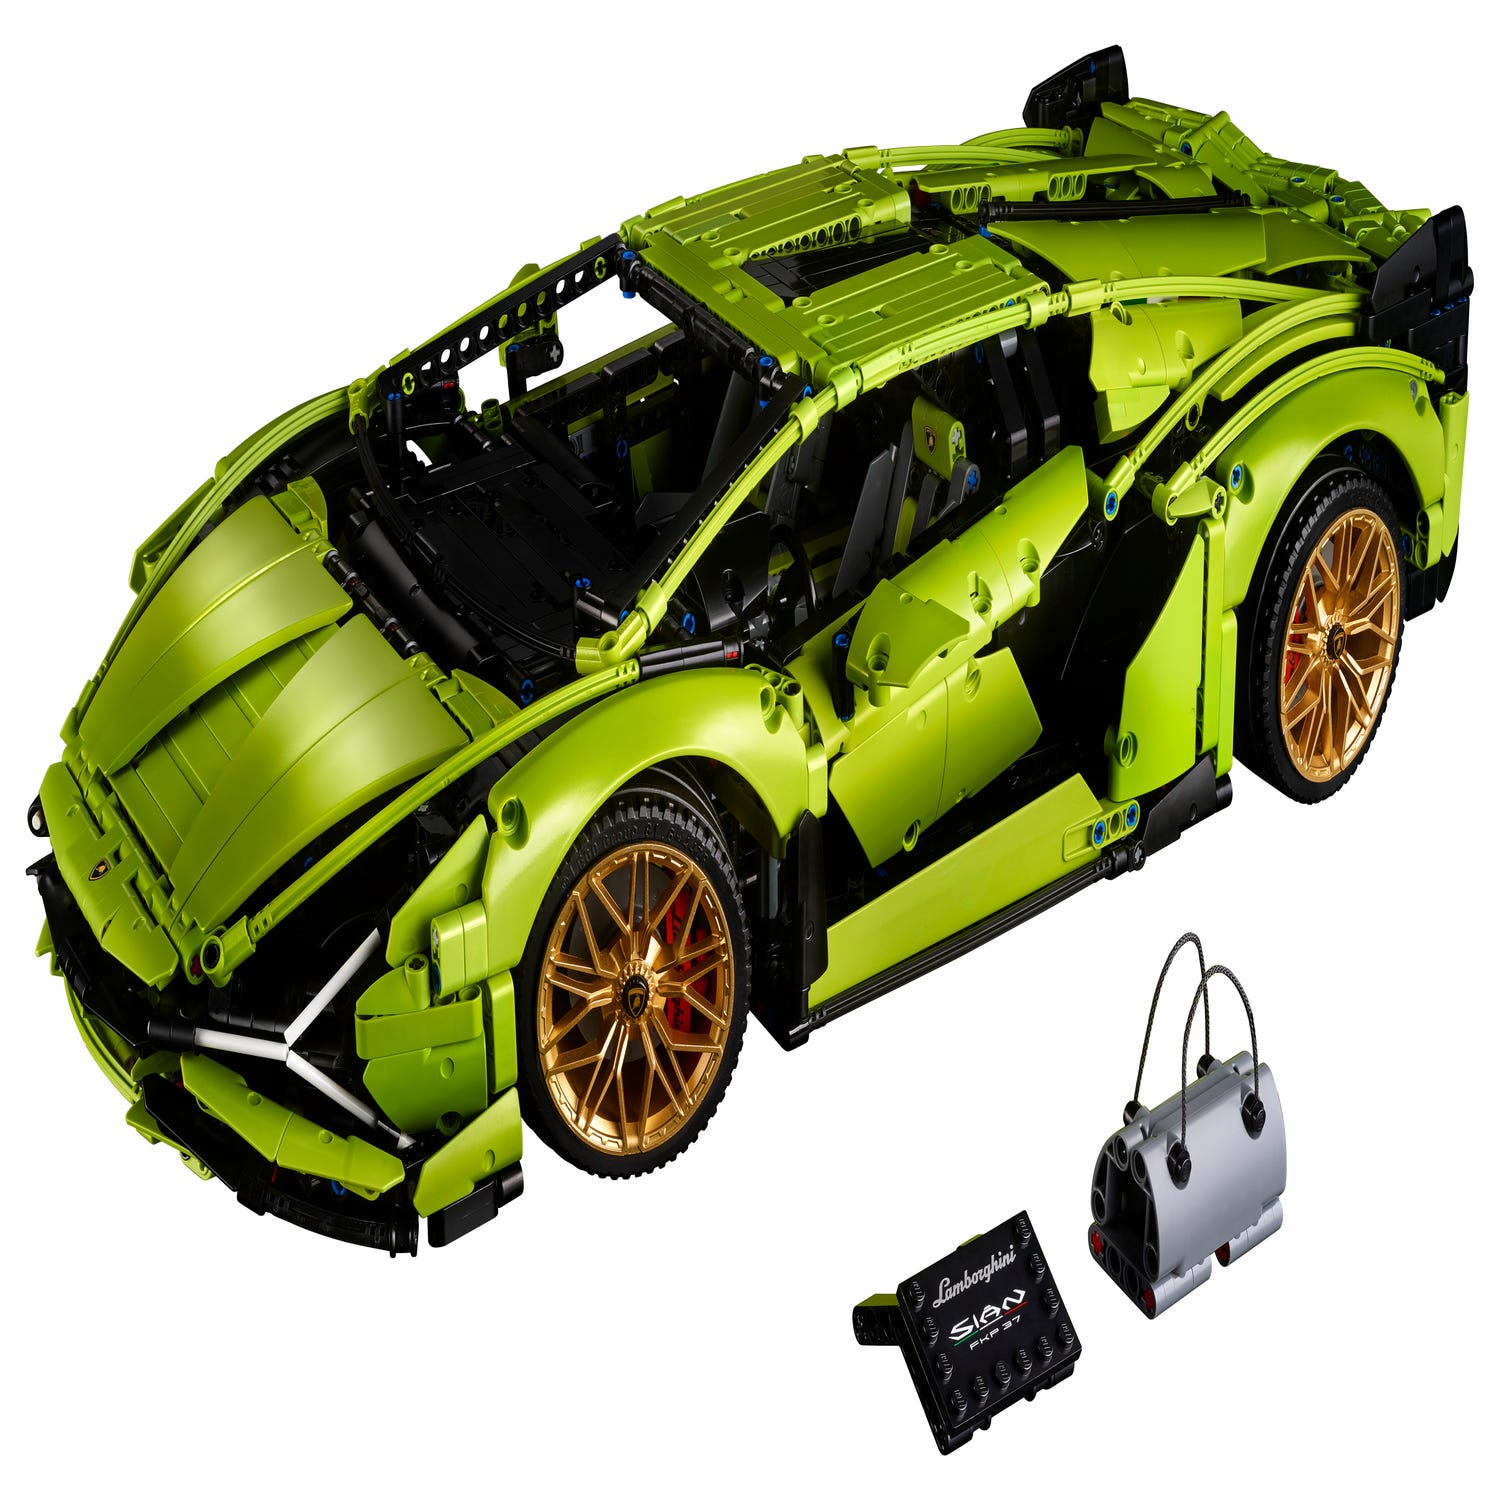 Lamborghini Sian Fkp 37 Technic Buy Online At The Official Lego Shop Us